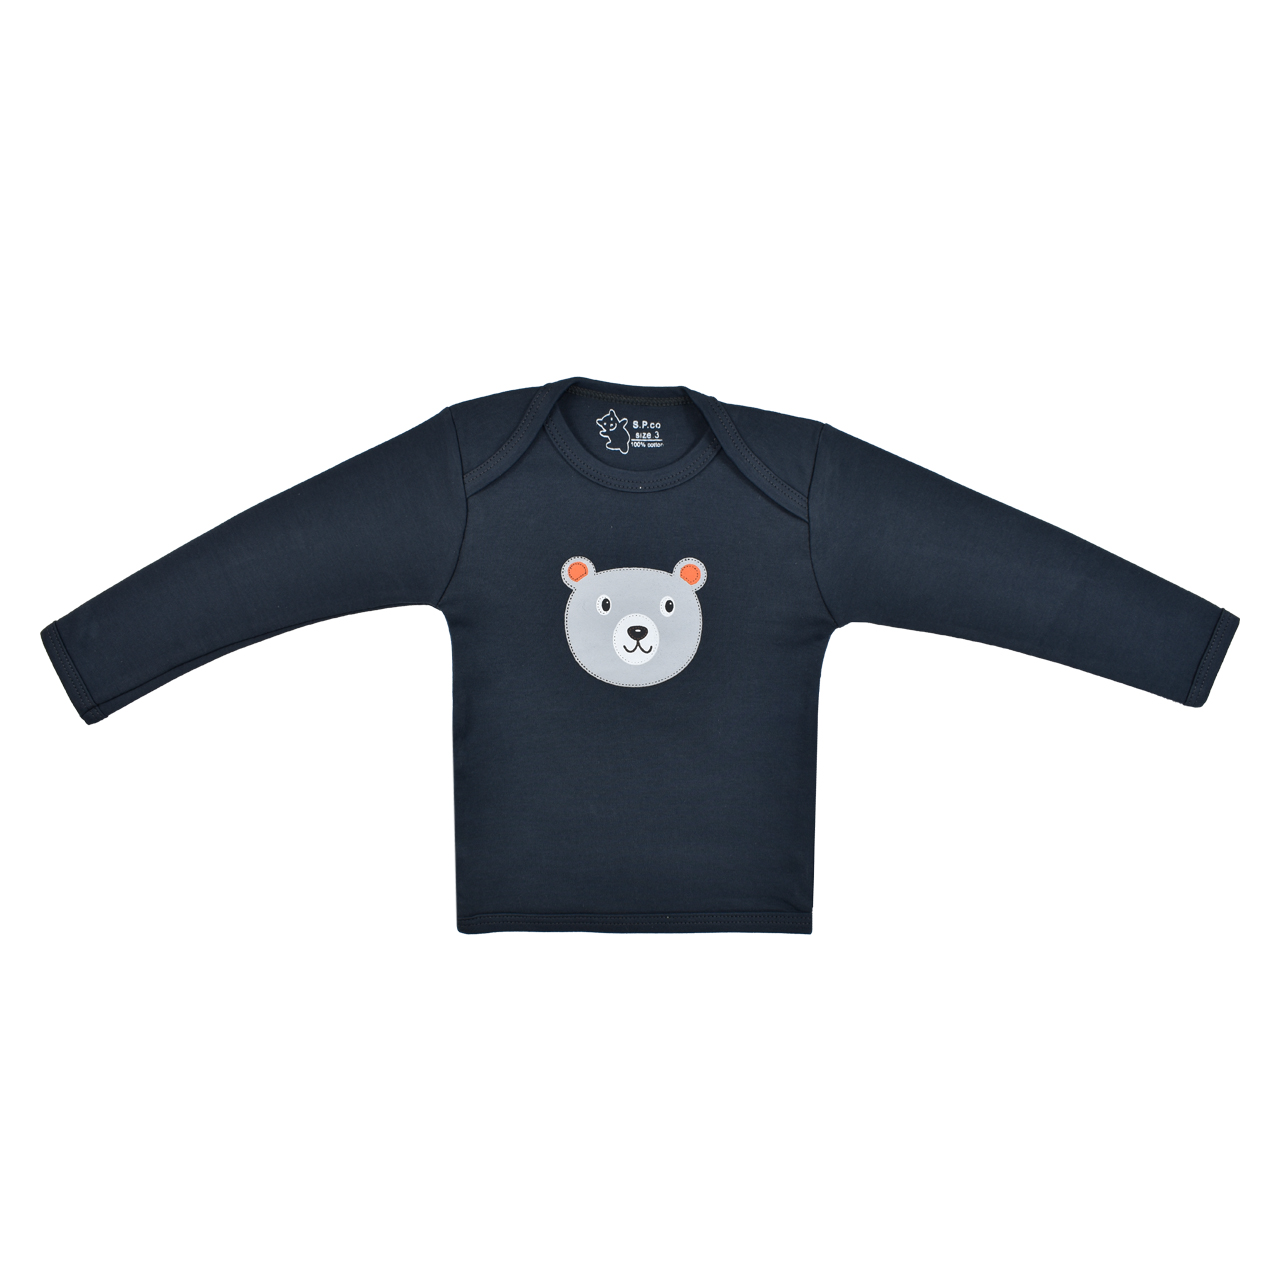 تی شرت آستین بلند نوزادی اسپیکو مدل خرس